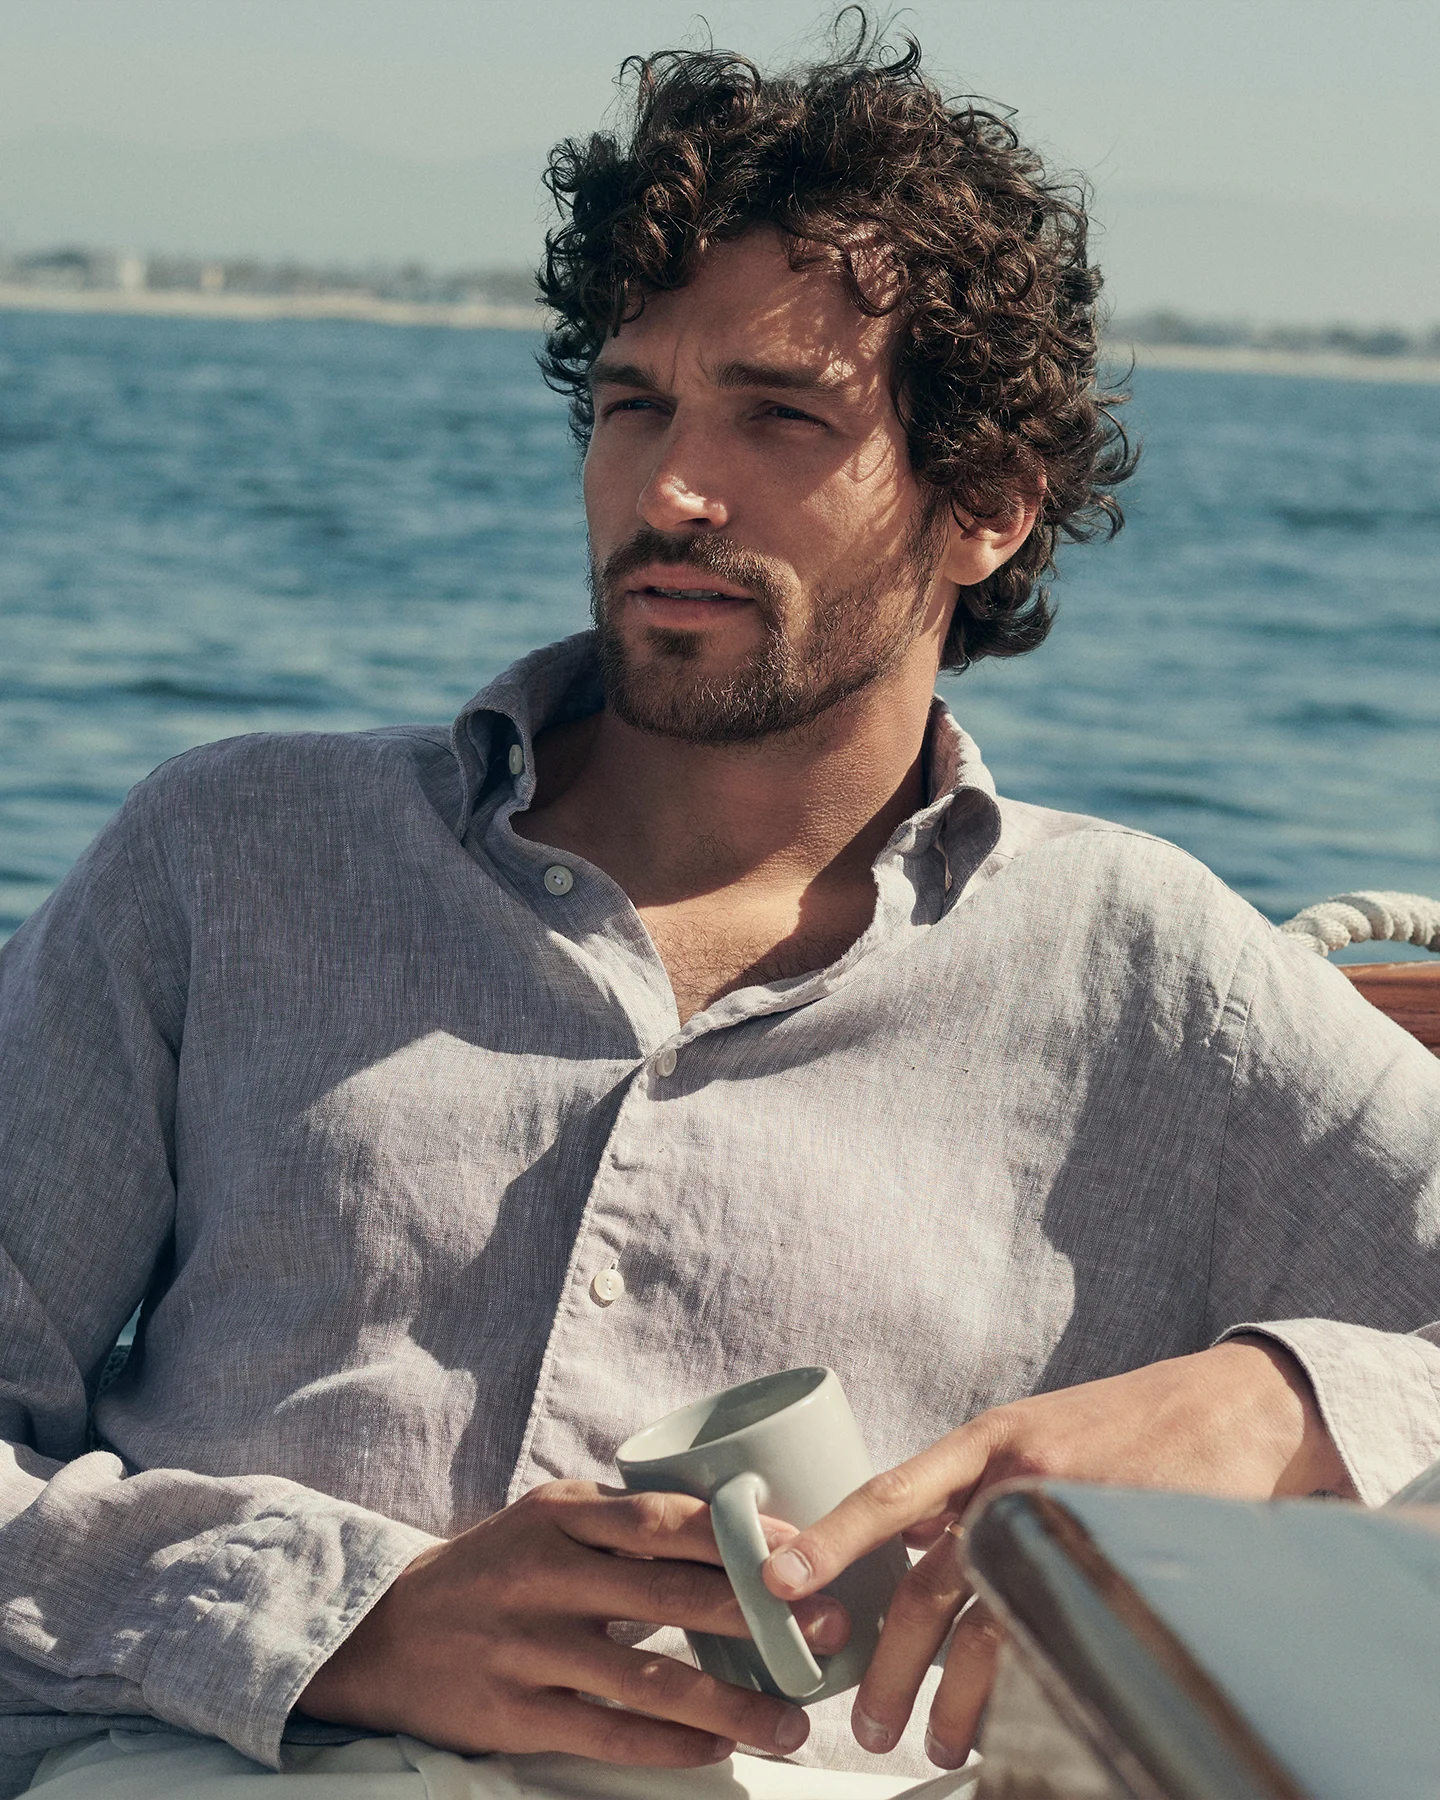 Man on a boat wearing a beige linen shirt